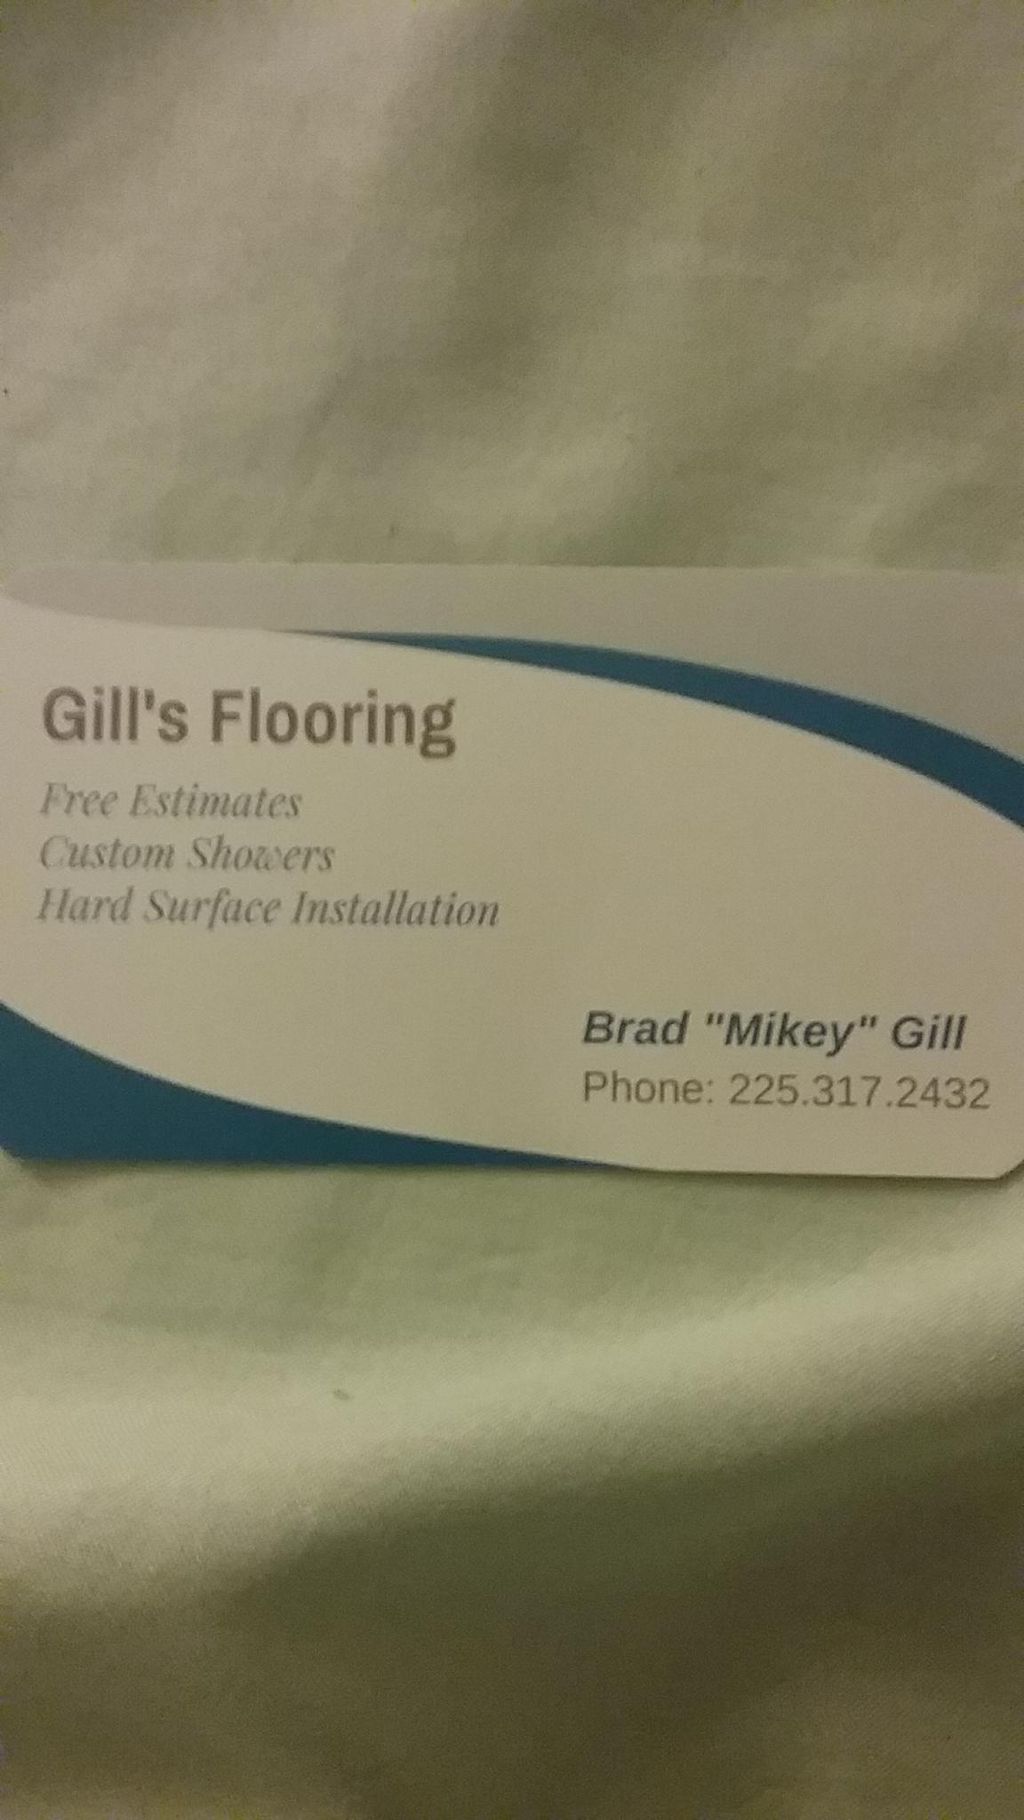 Gills flooring